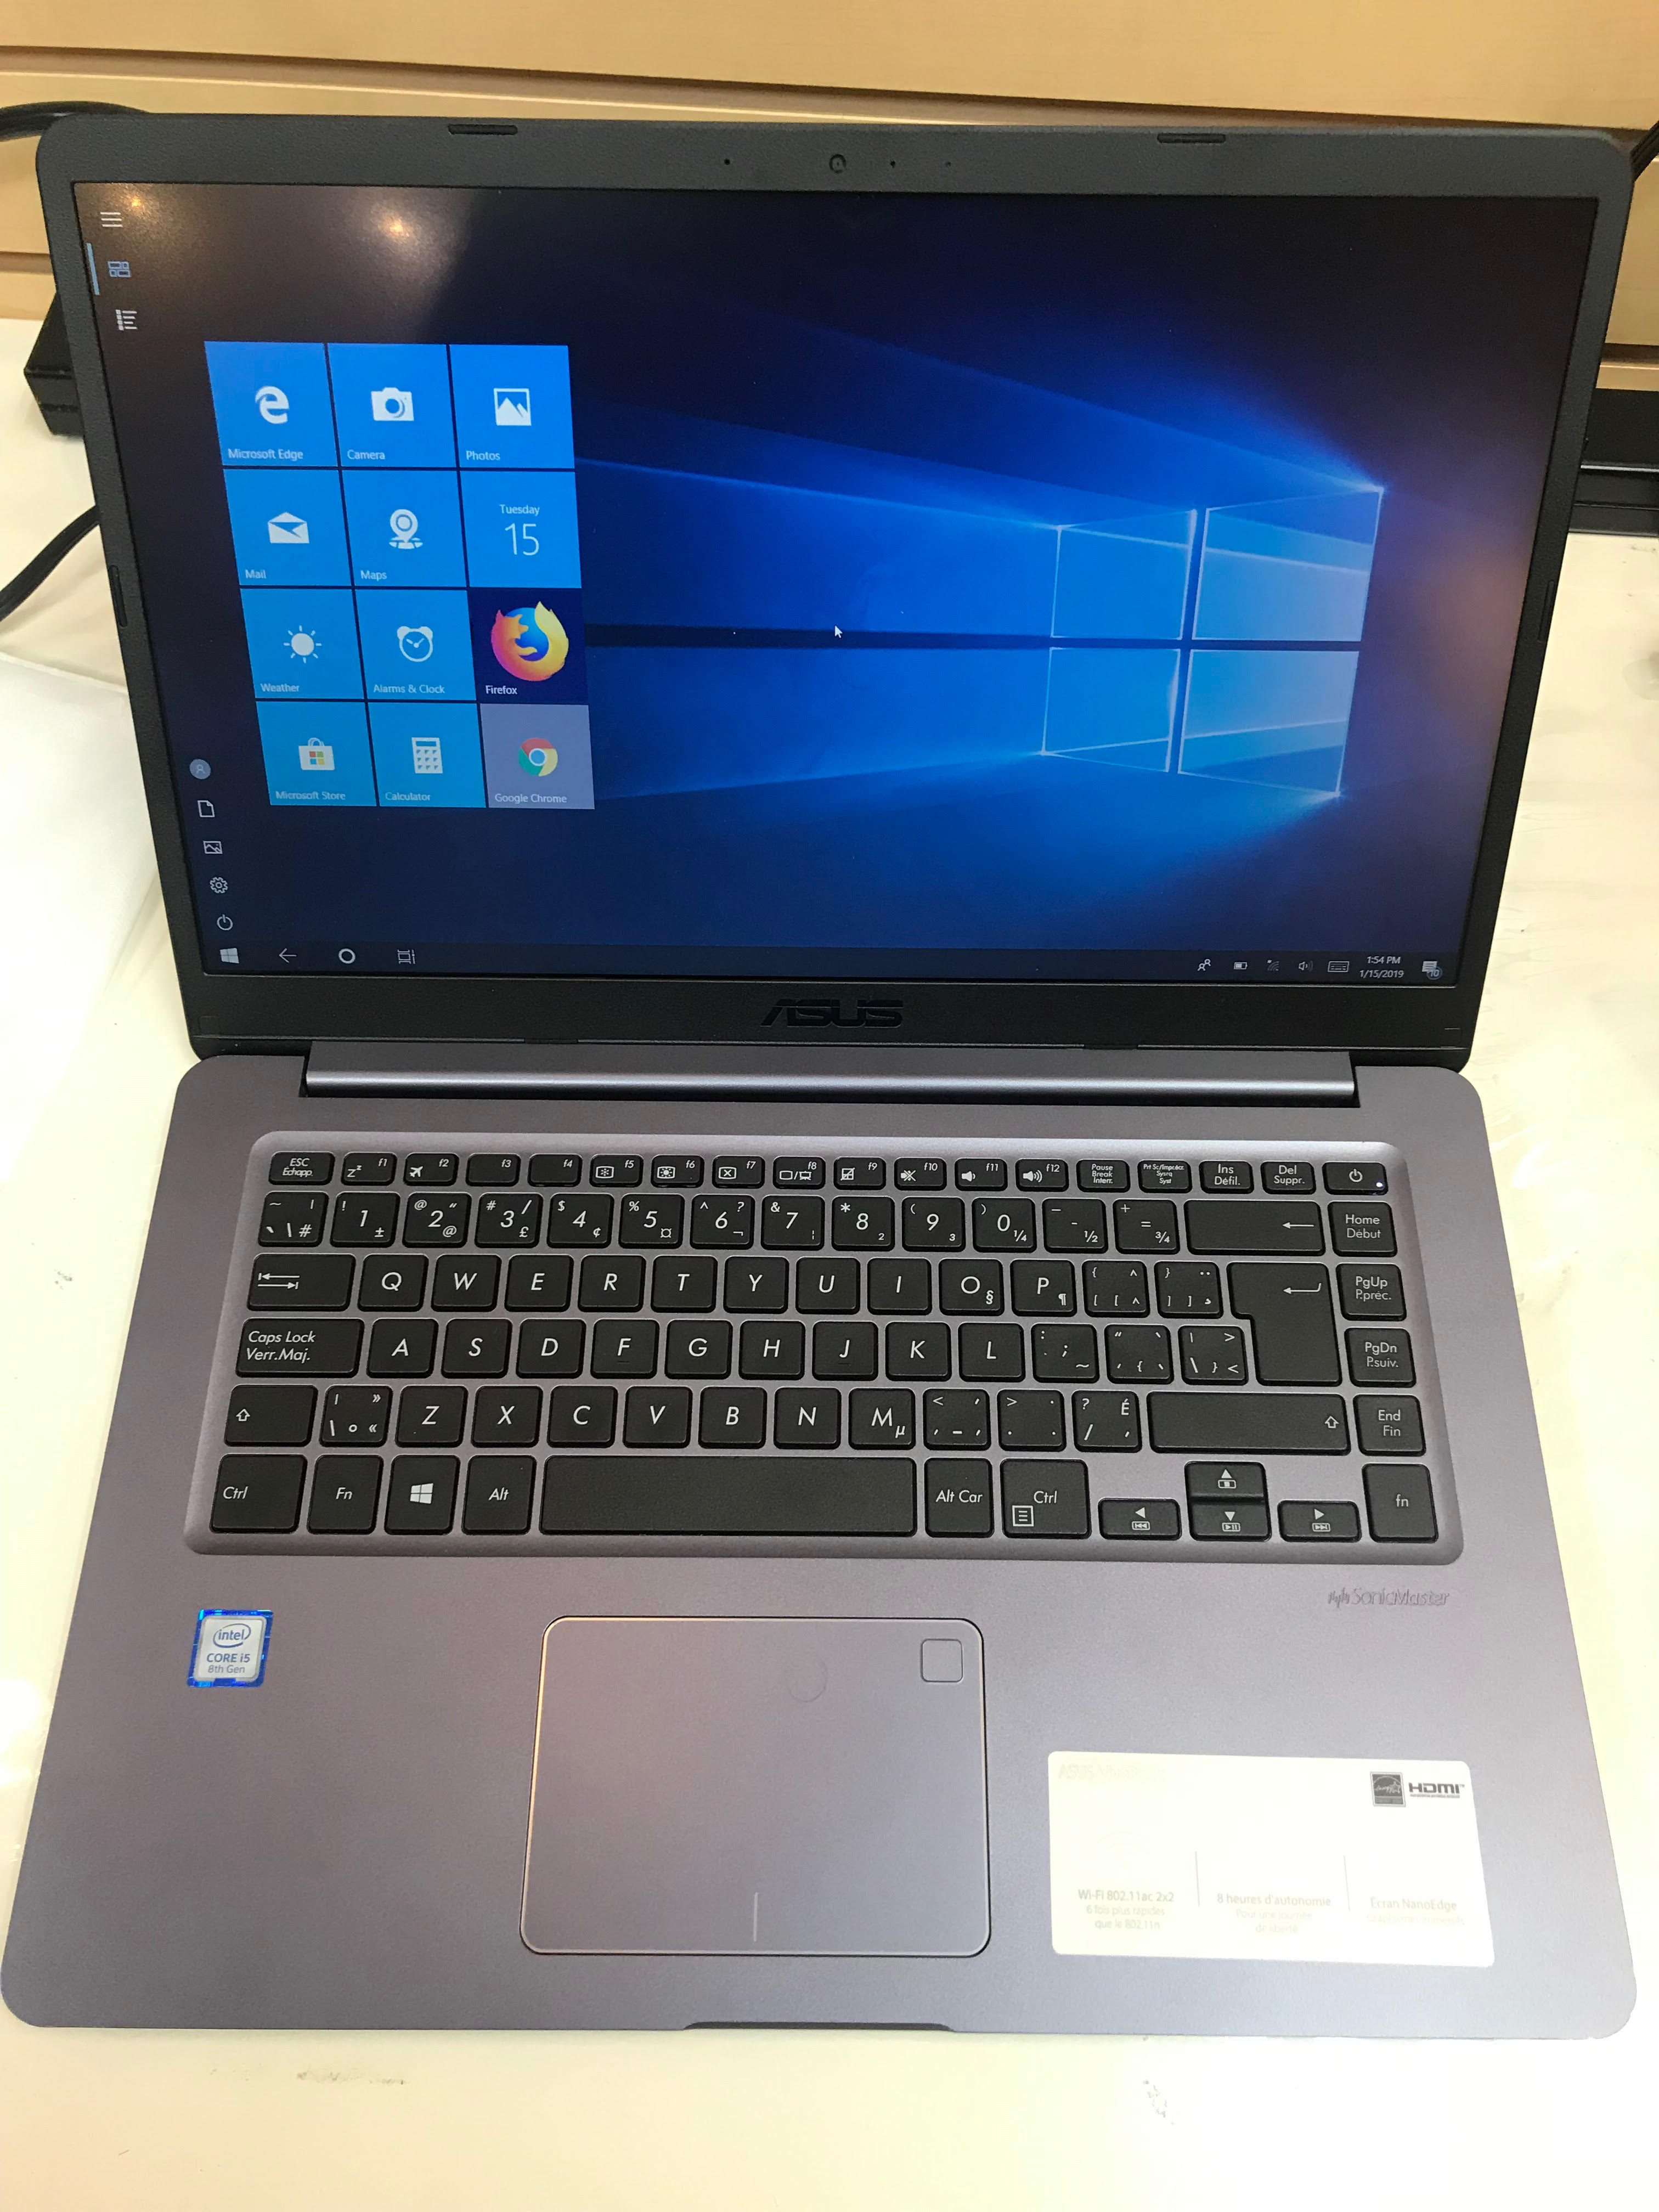 Asus x510u VivoBook Laptop Repair in Thornhill Ontario | MT Systems